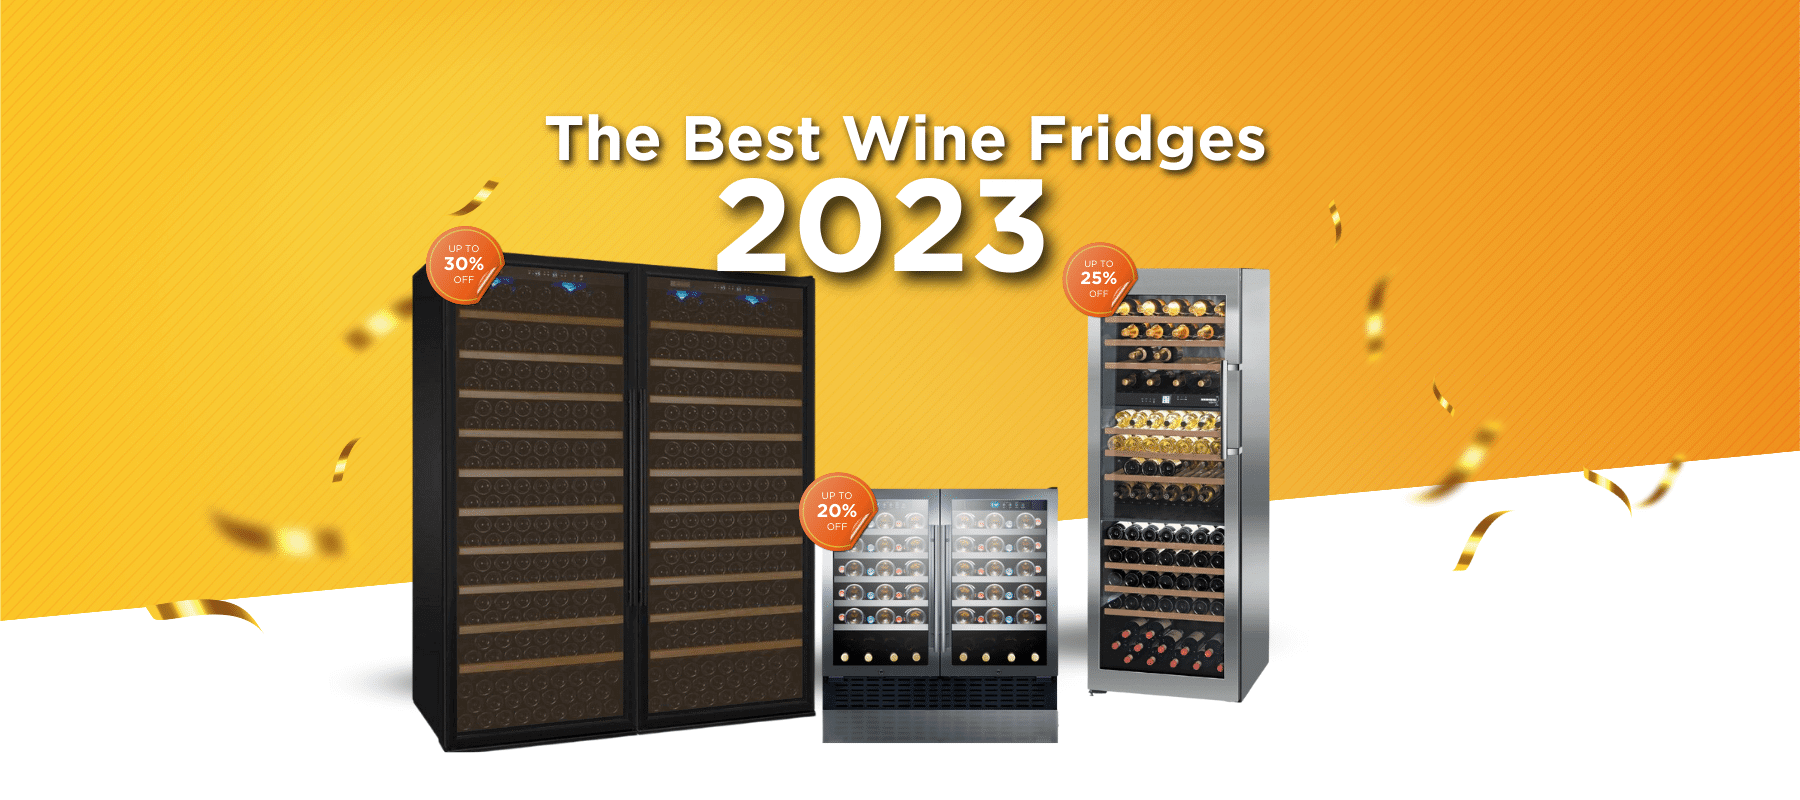 The Best Wine Fridges for 2023 | Big Discounts - Wine Coolers Empire